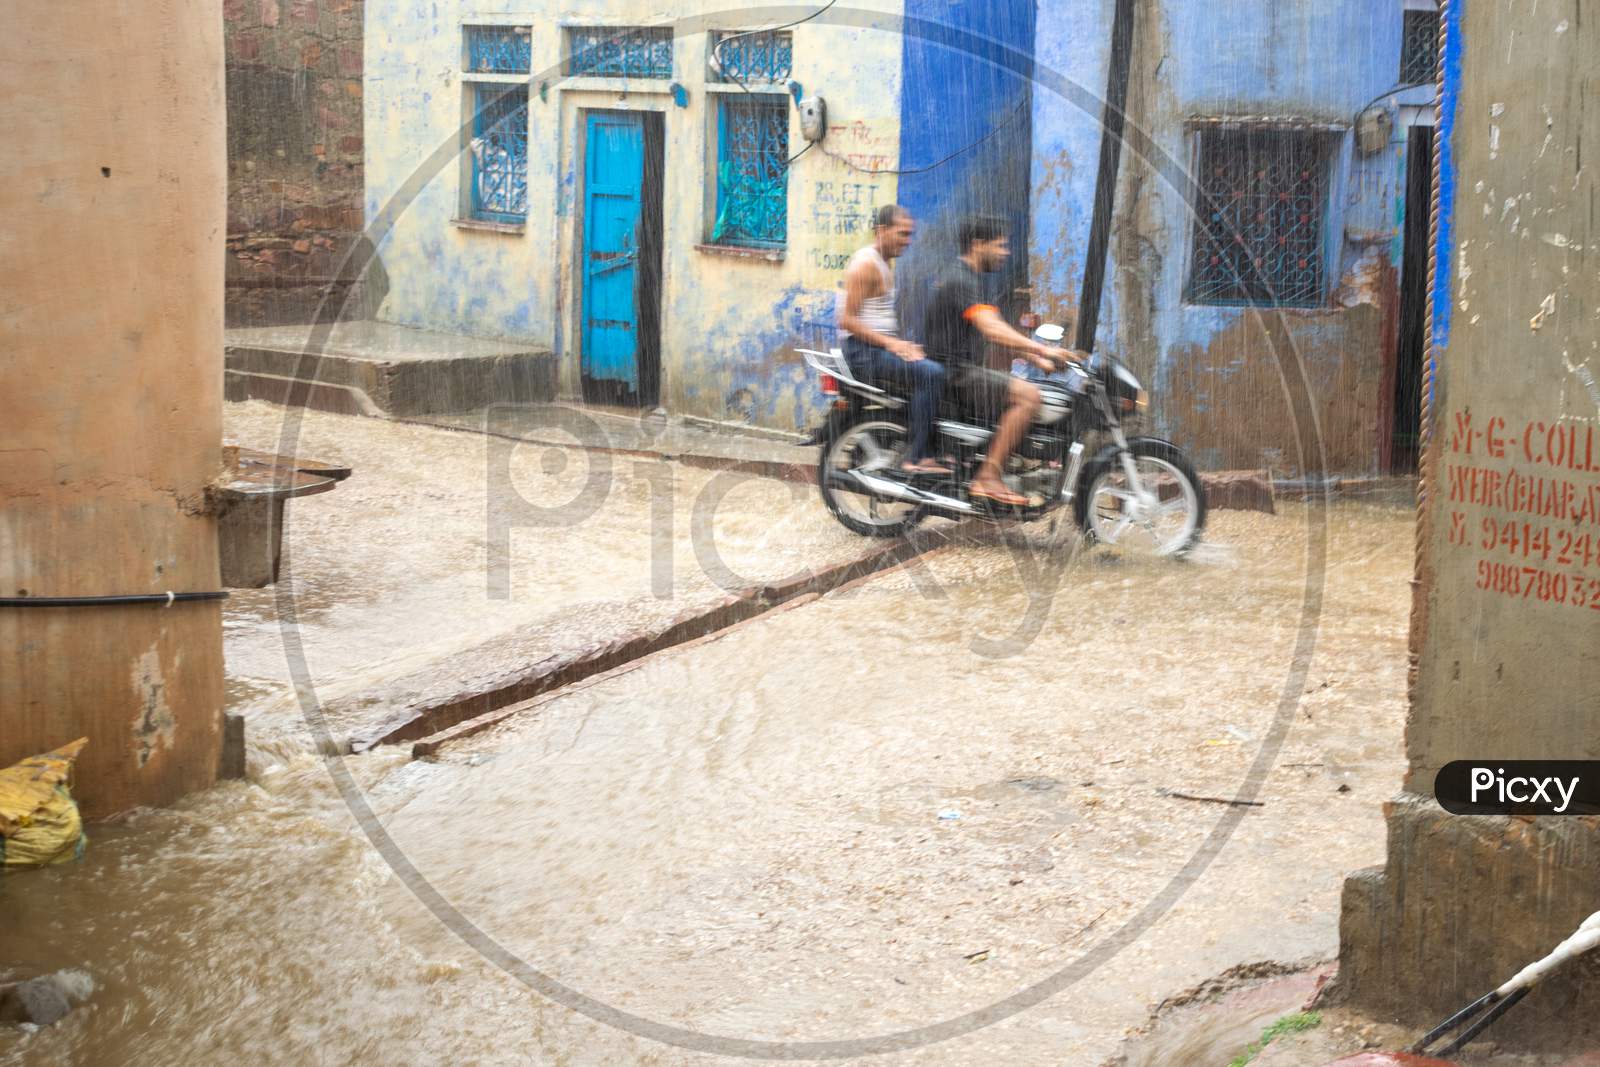 People ride bike while it rains heavily during monsoon season in Bharatpur